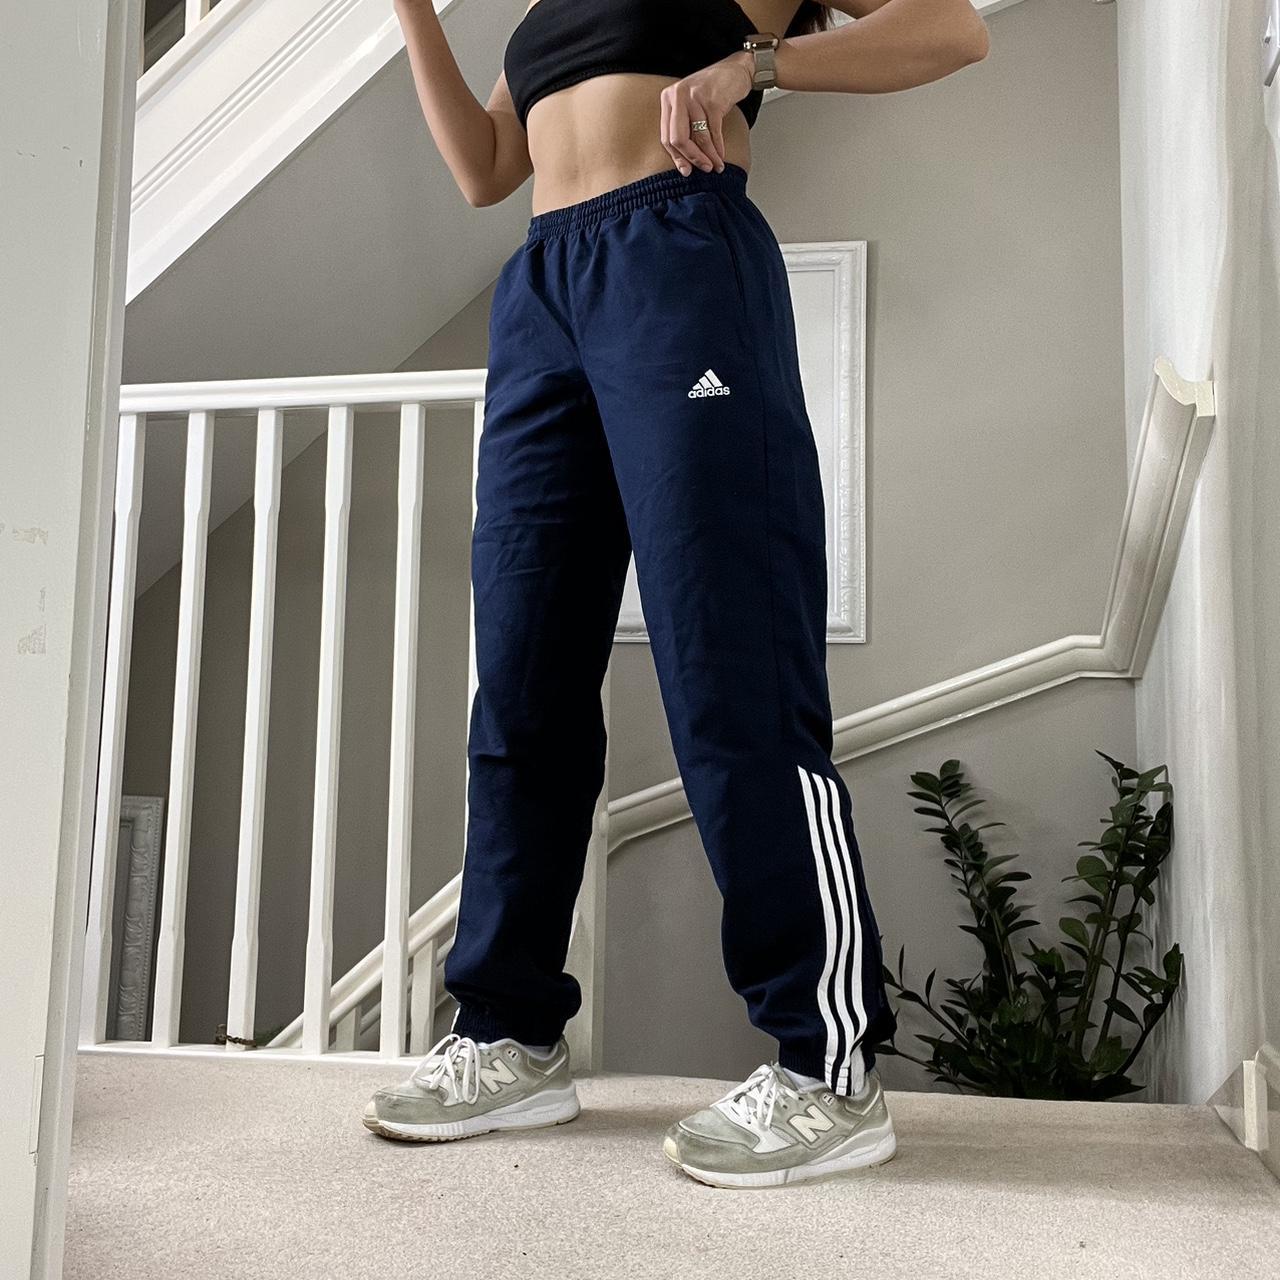 Adidas Sweatpants Women's Size Medium M Wide Leg - Depop